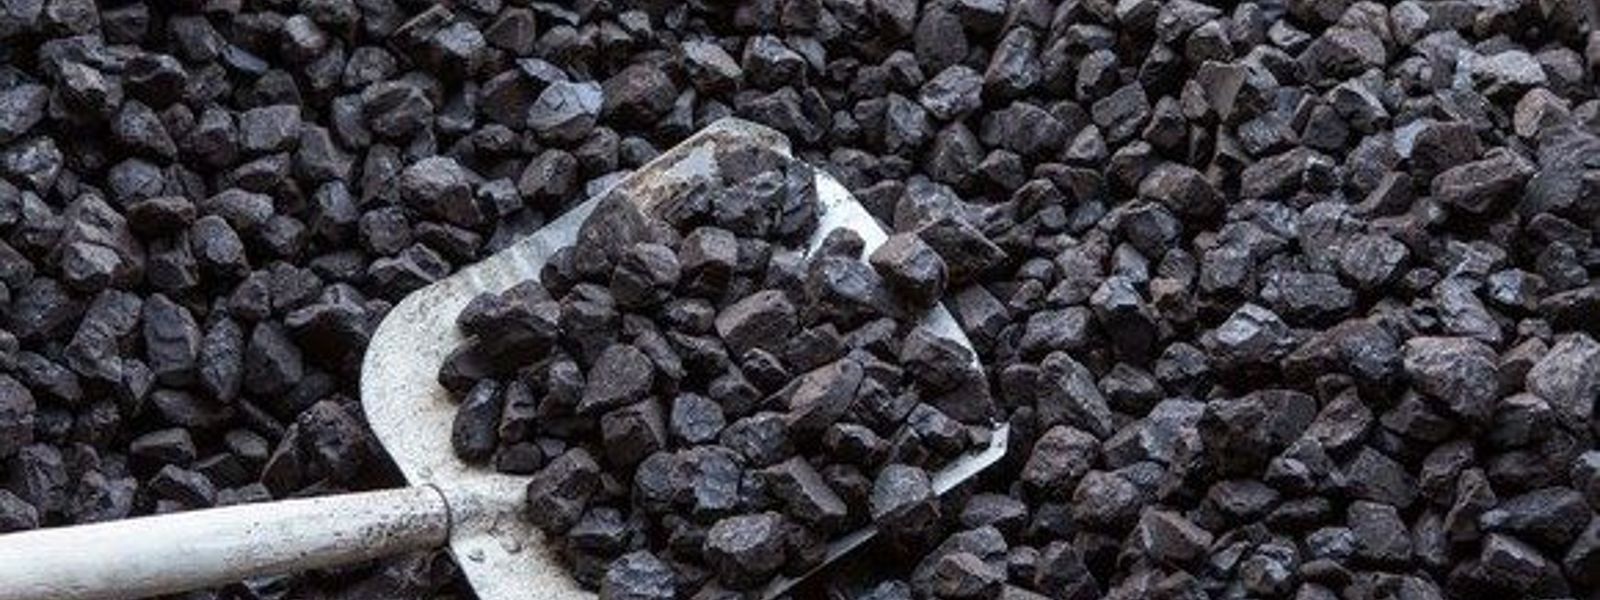 ‘No Coal – No Power’ : Coal shipment delayed to early January 2023